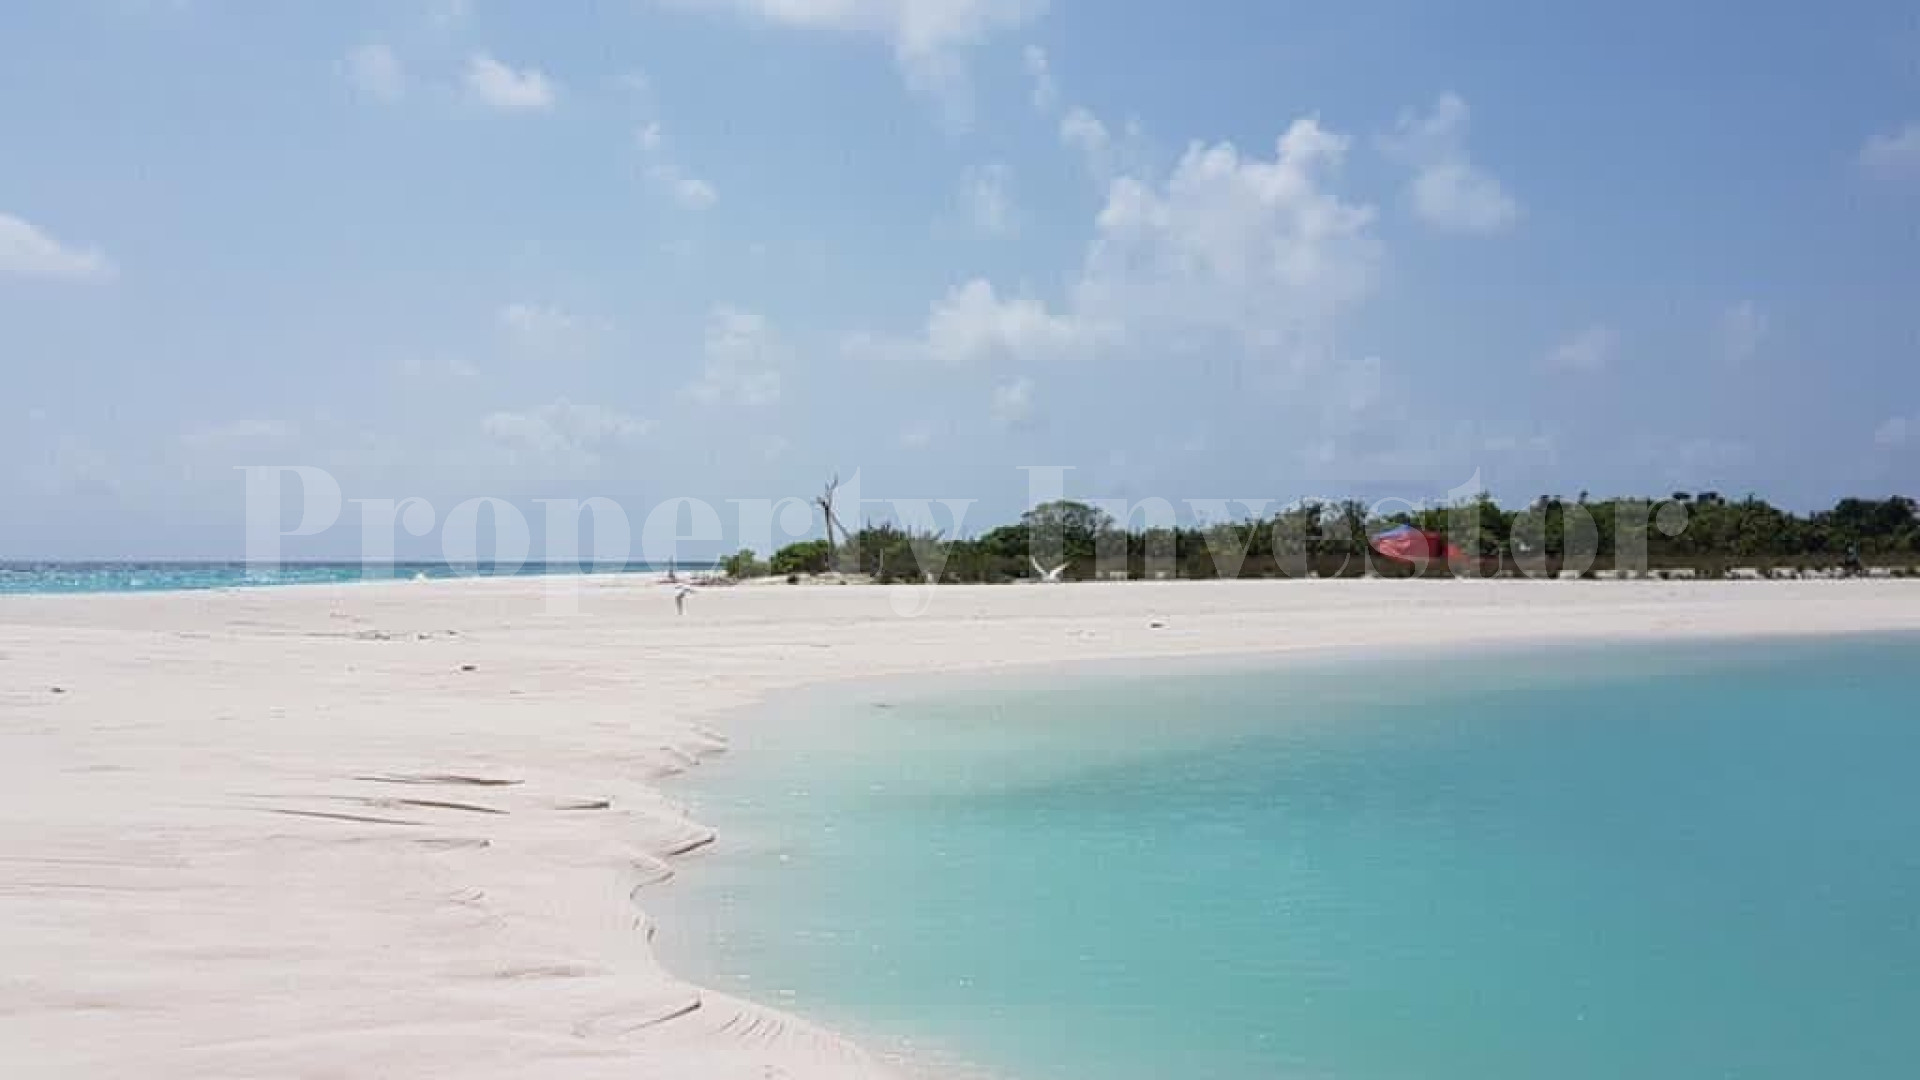 Pristine 14.9 Hectare Private Virgin Island with 1.75 Kilometers of Beaches for Sale in the Maldives